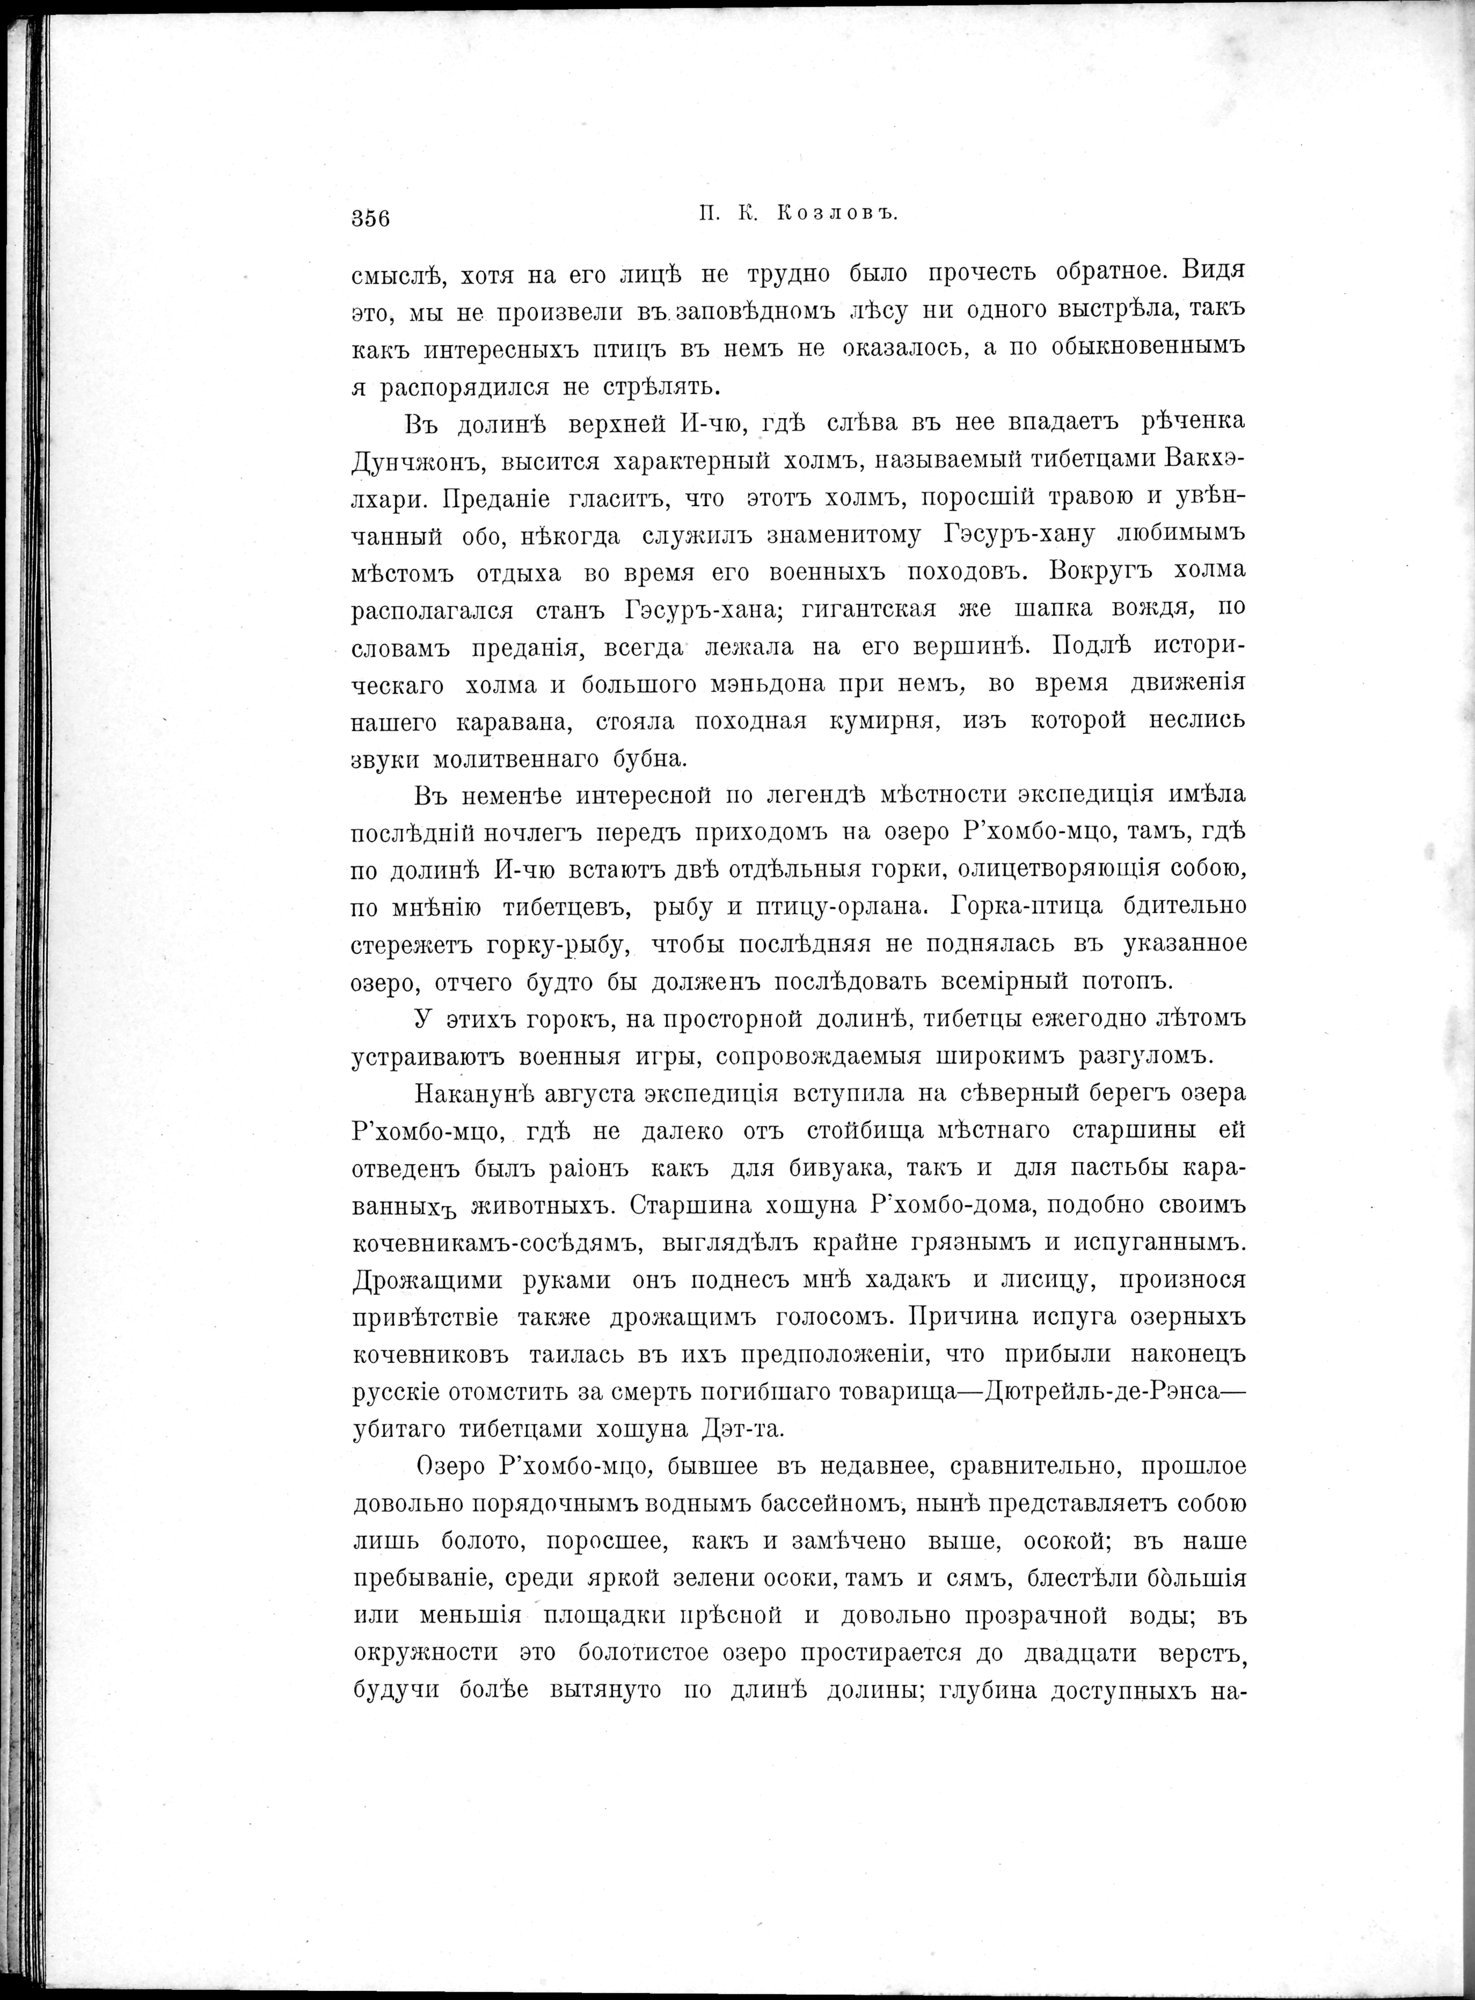 Mongoliia i Kam : vol.2 / Page 138 (Grayscale High Resolution Image)